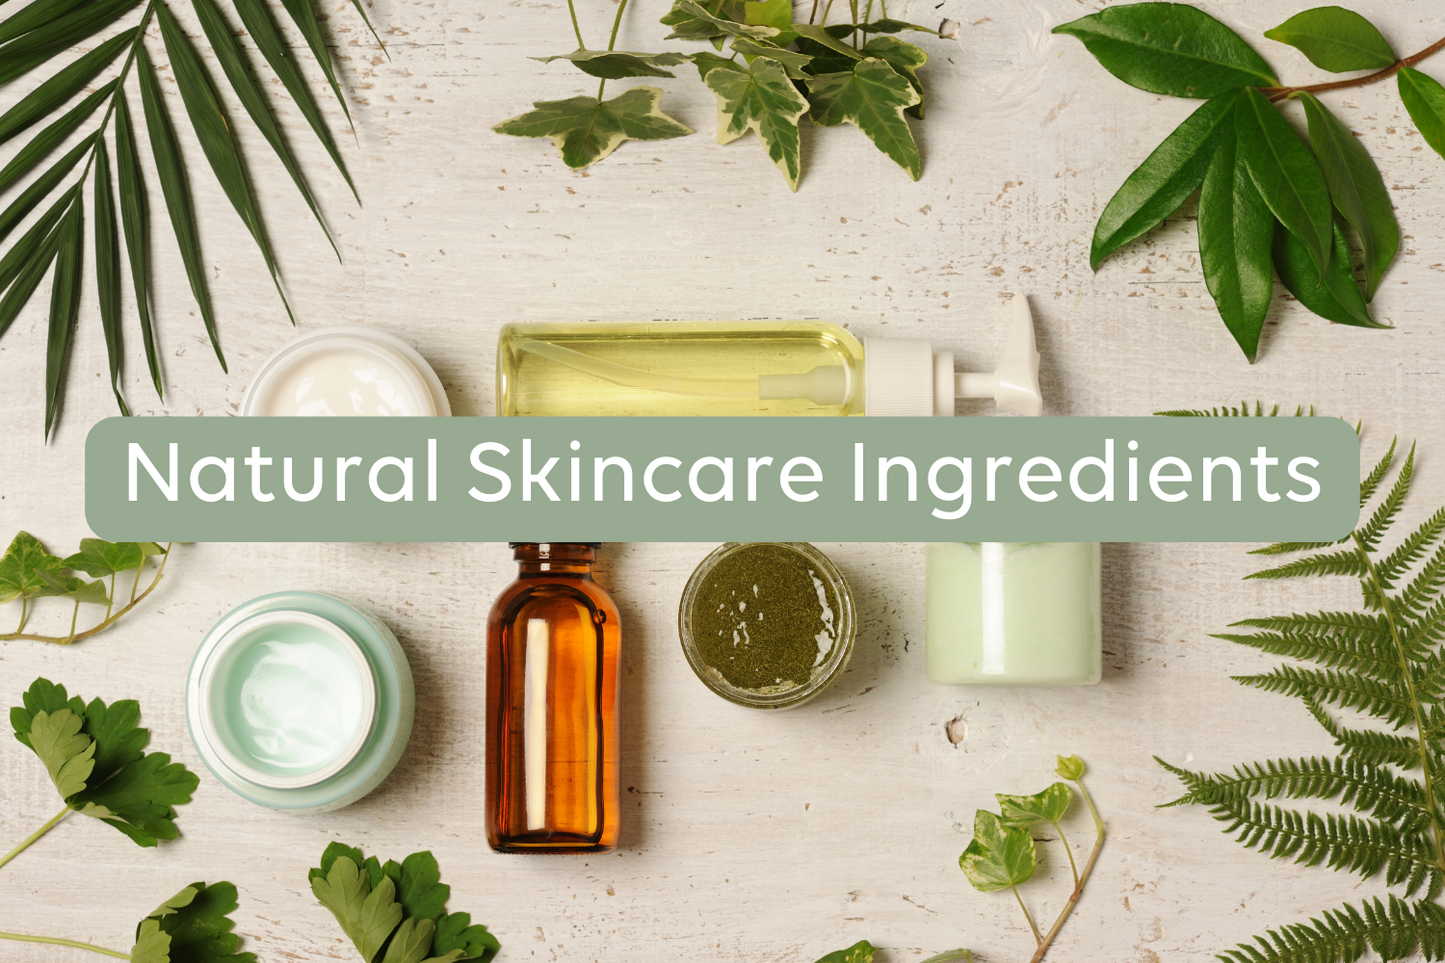 Natural skincare ingredients